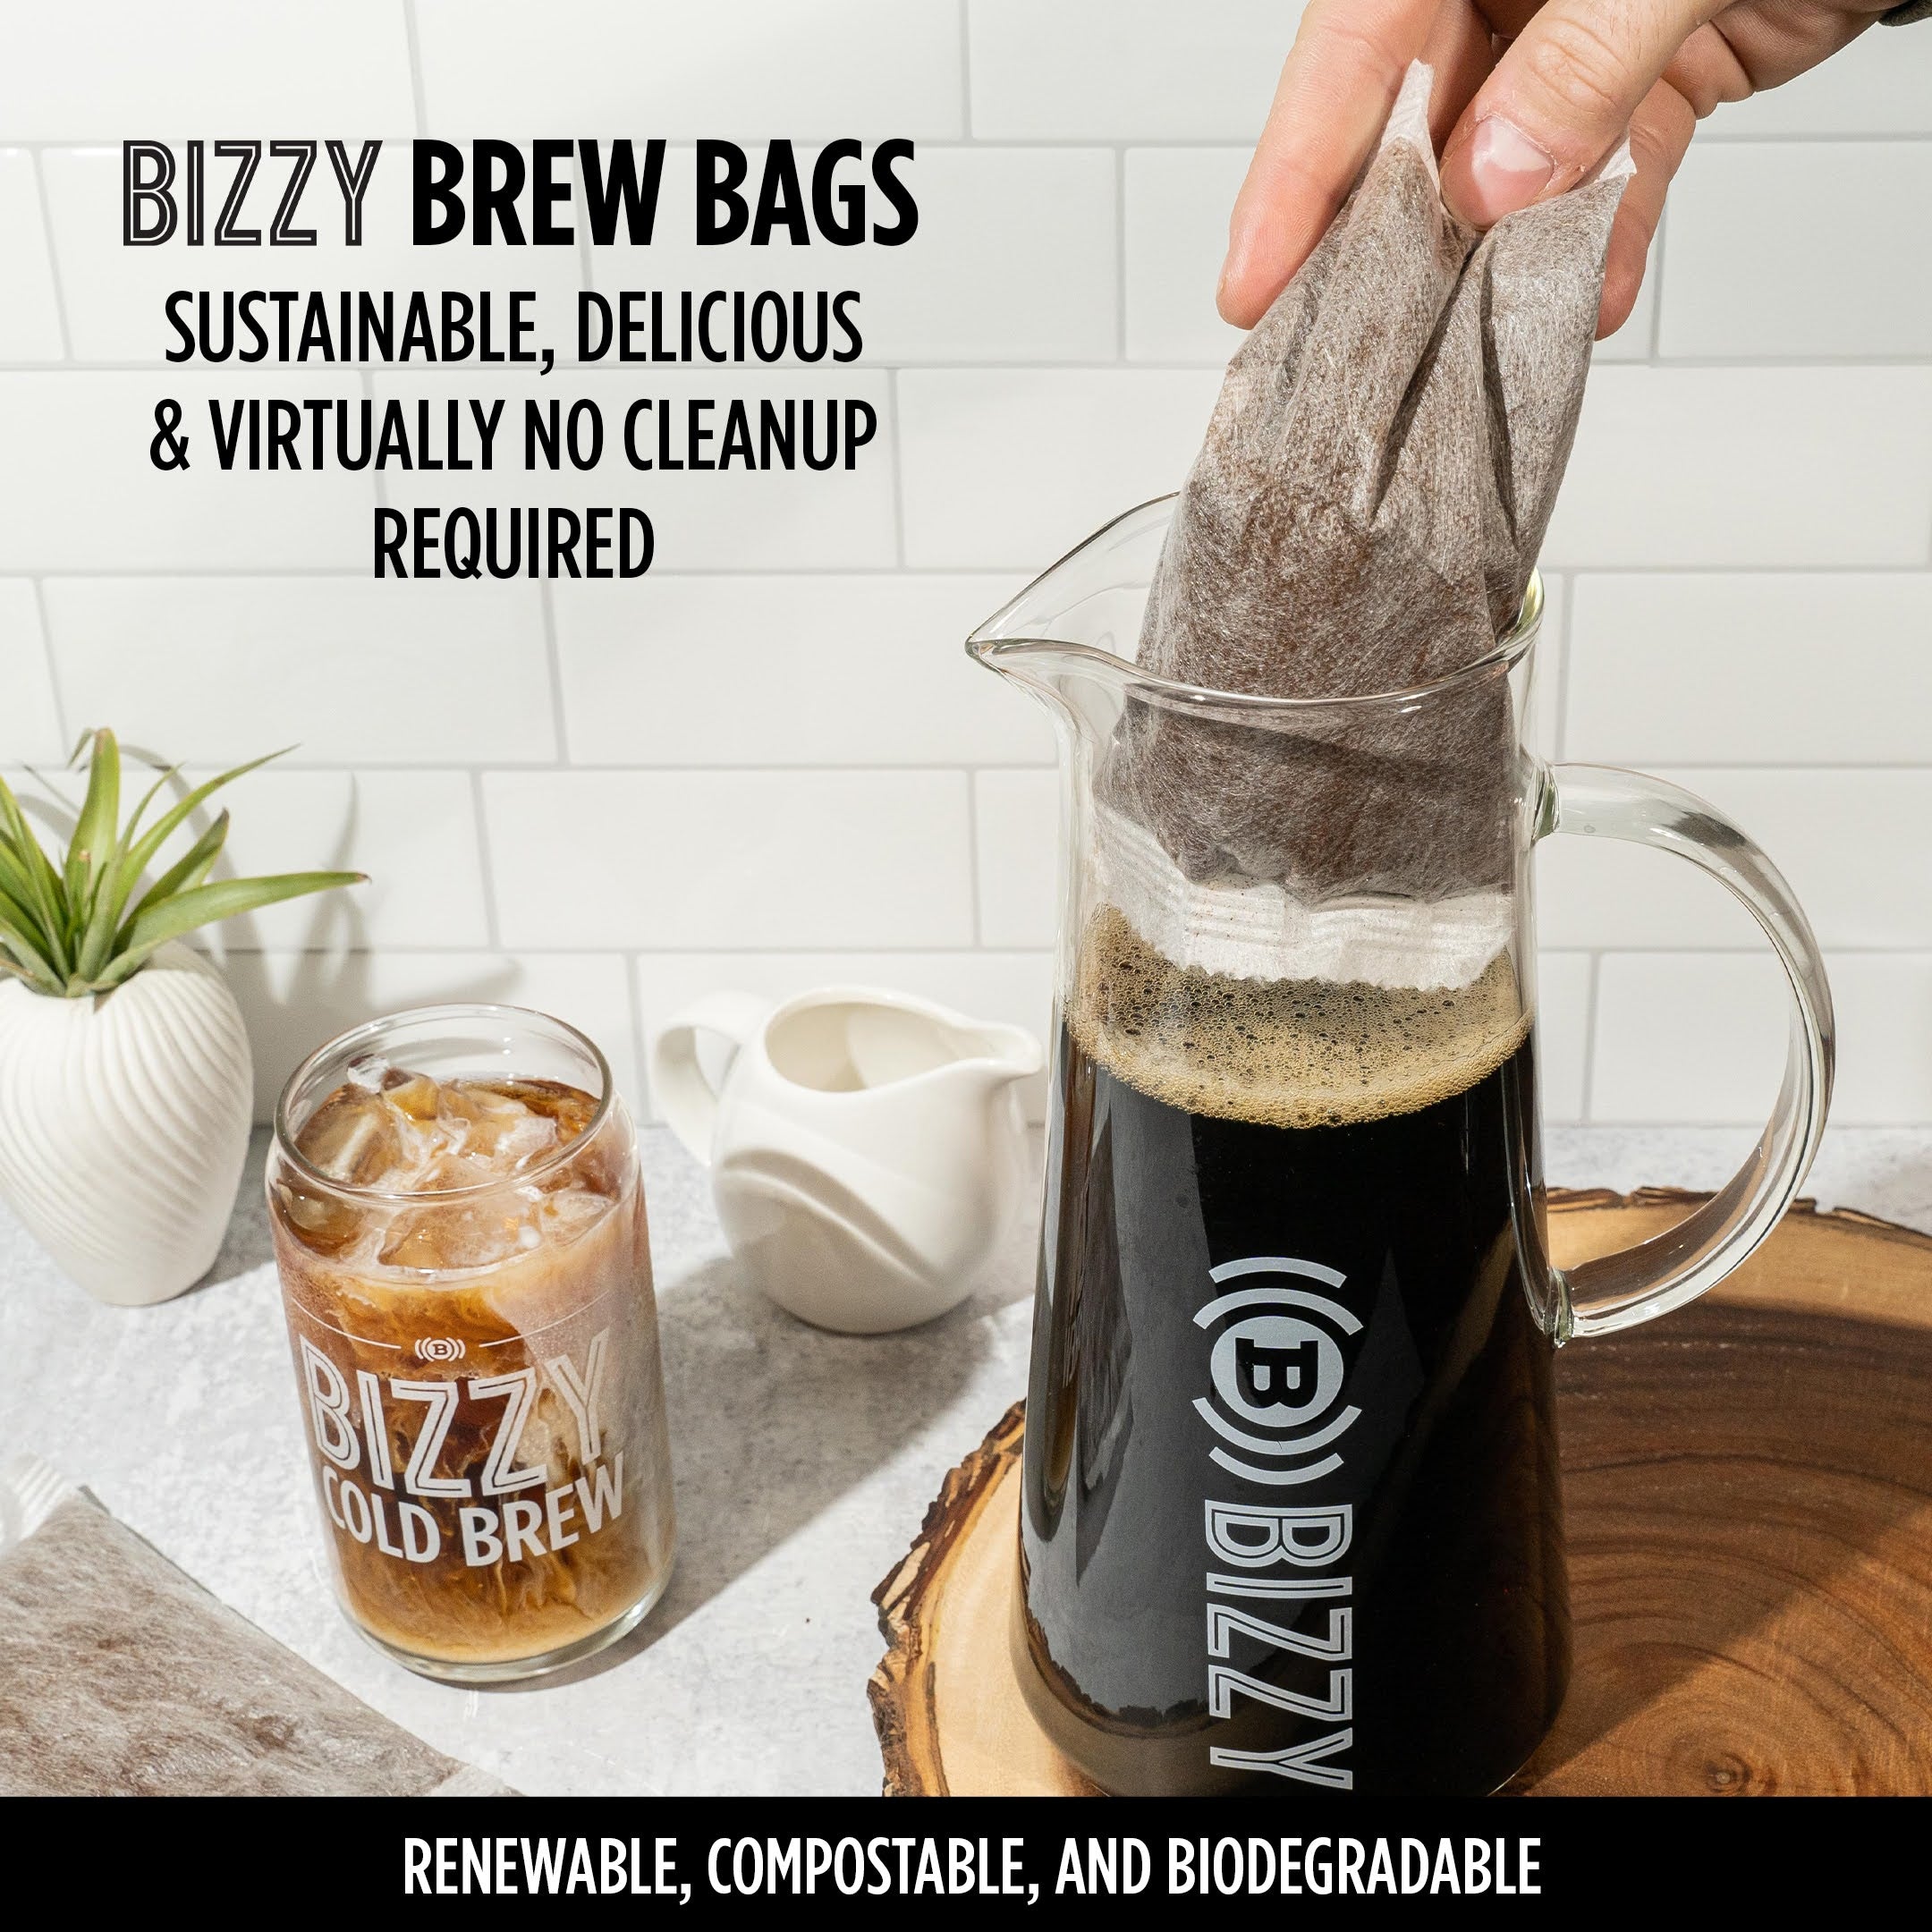 Espresso Blend | Brew Bags | Makes 14 Cups